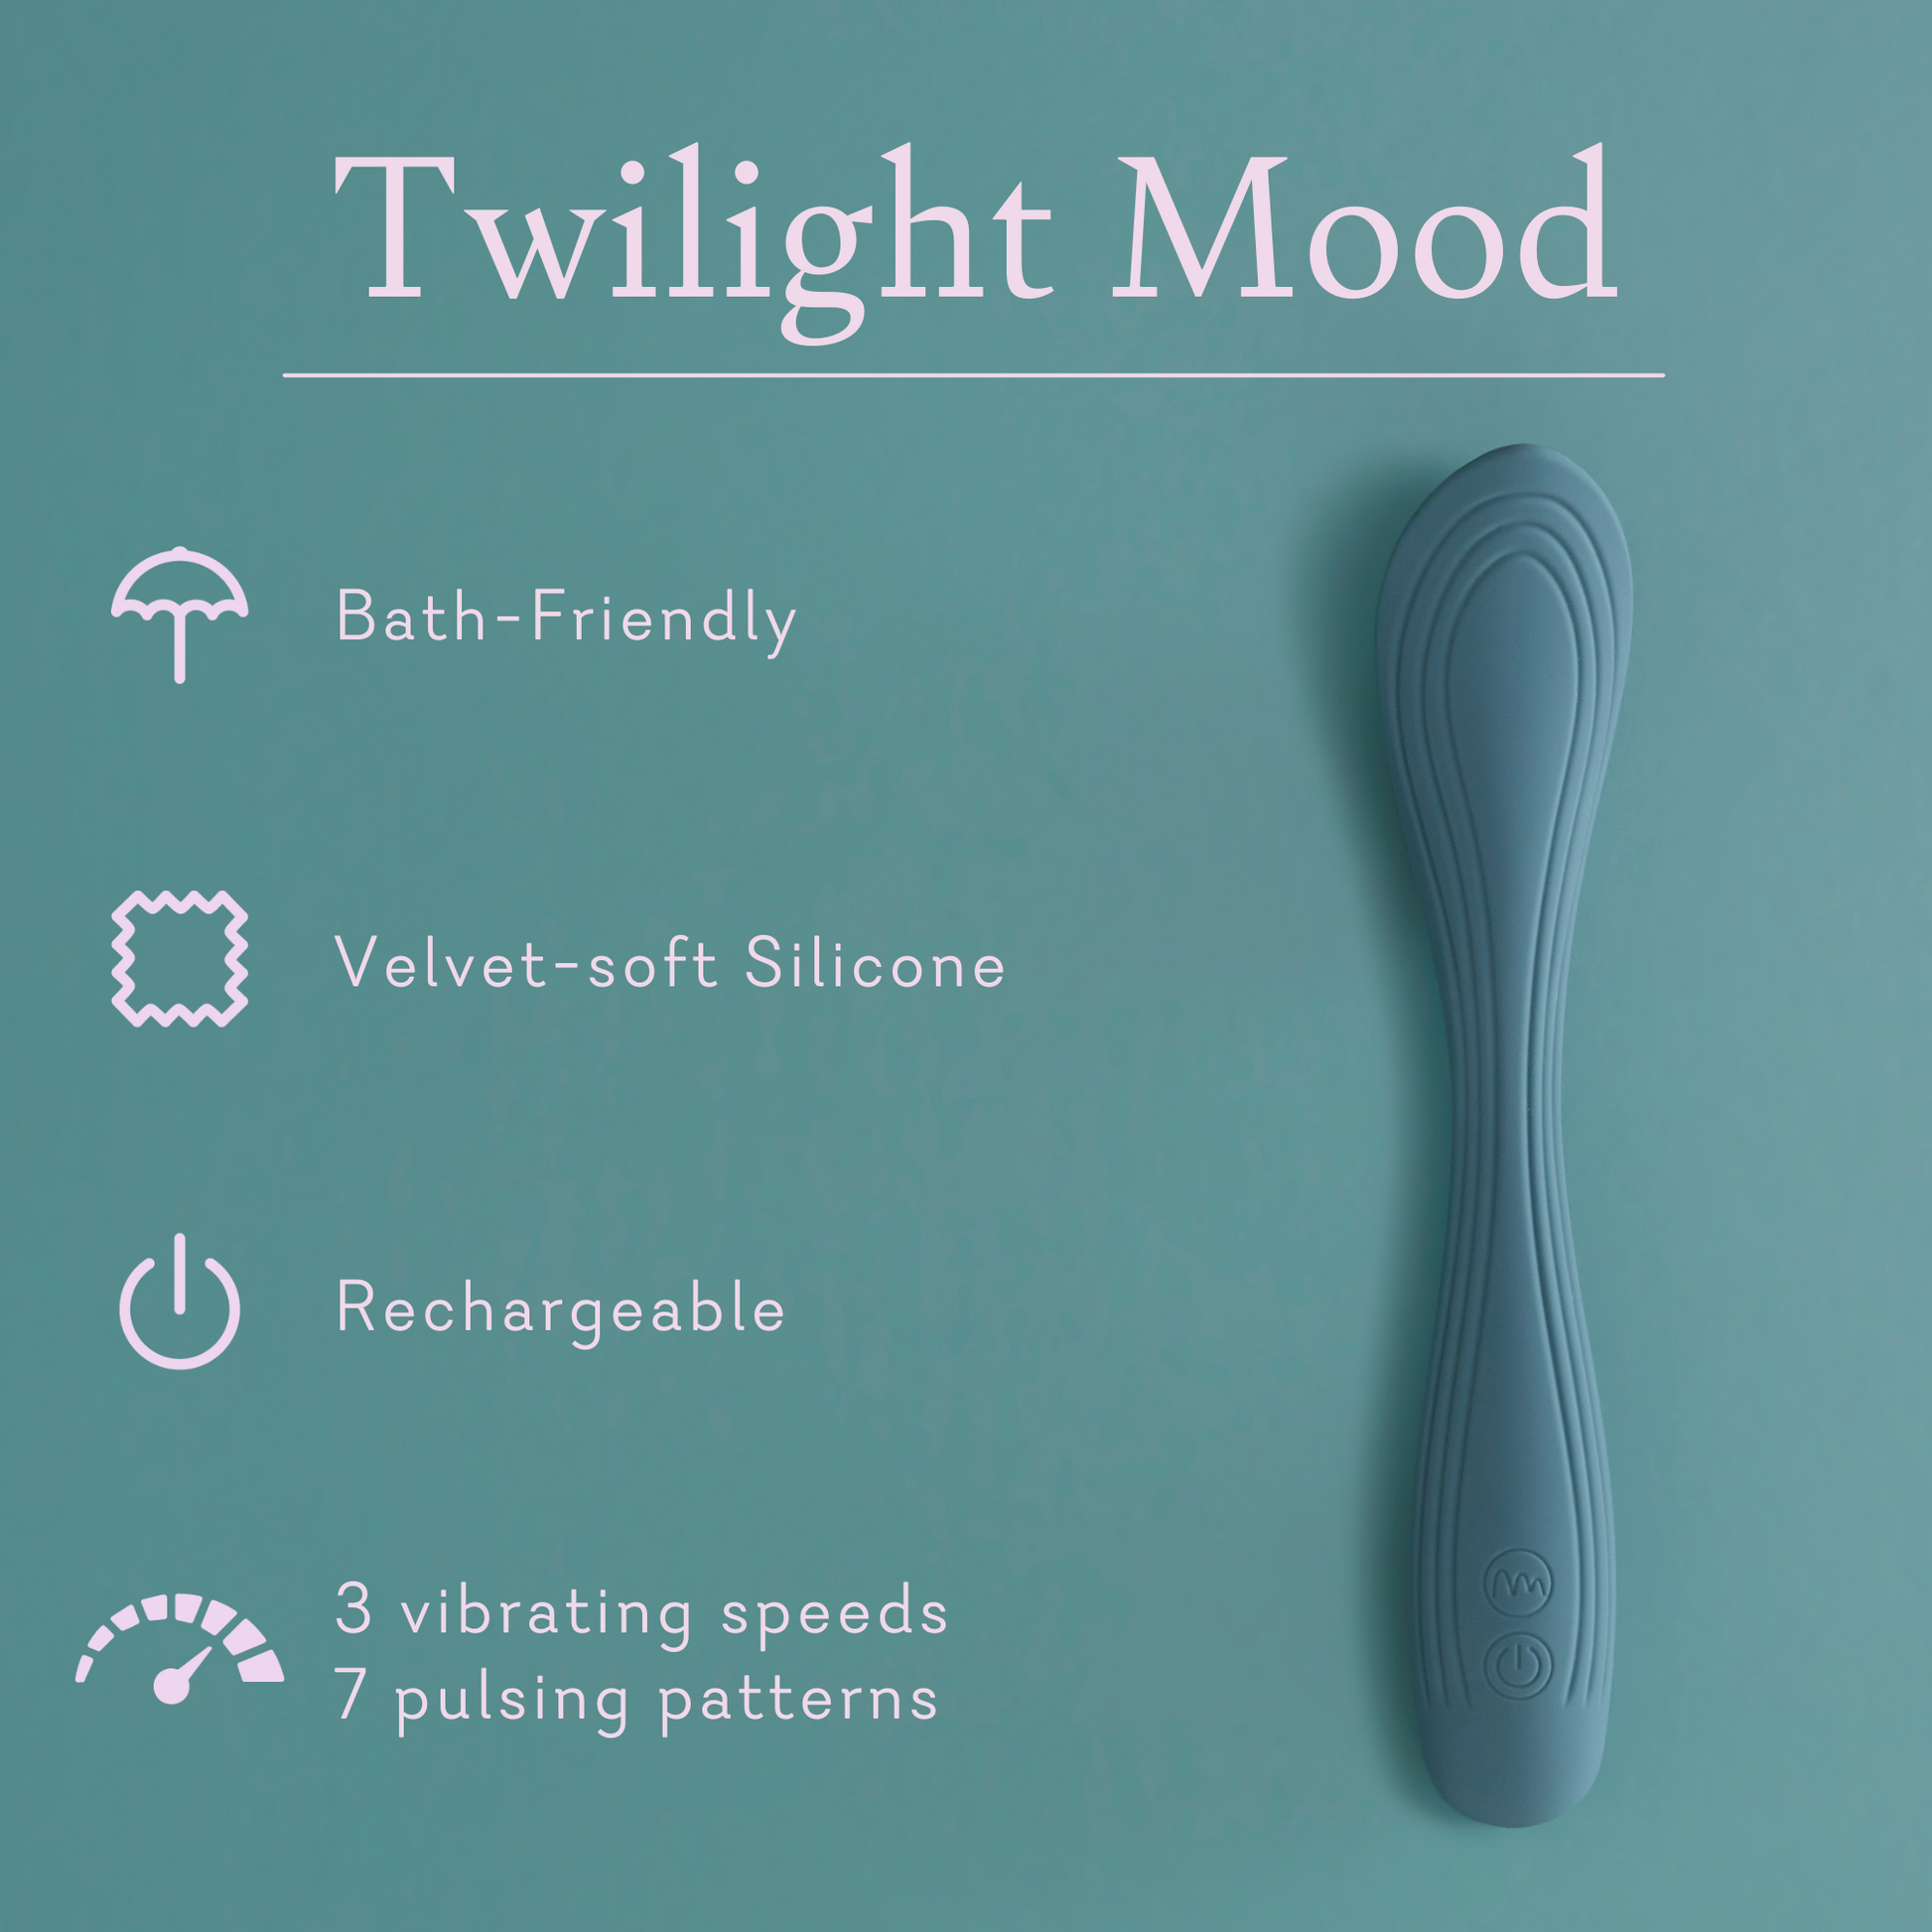 Twilight Mood Clitoral Vibrator from Pure Romance